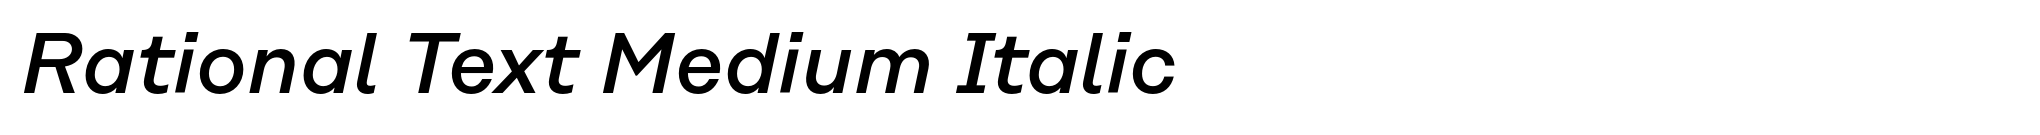 Rational Text Medium Italic image